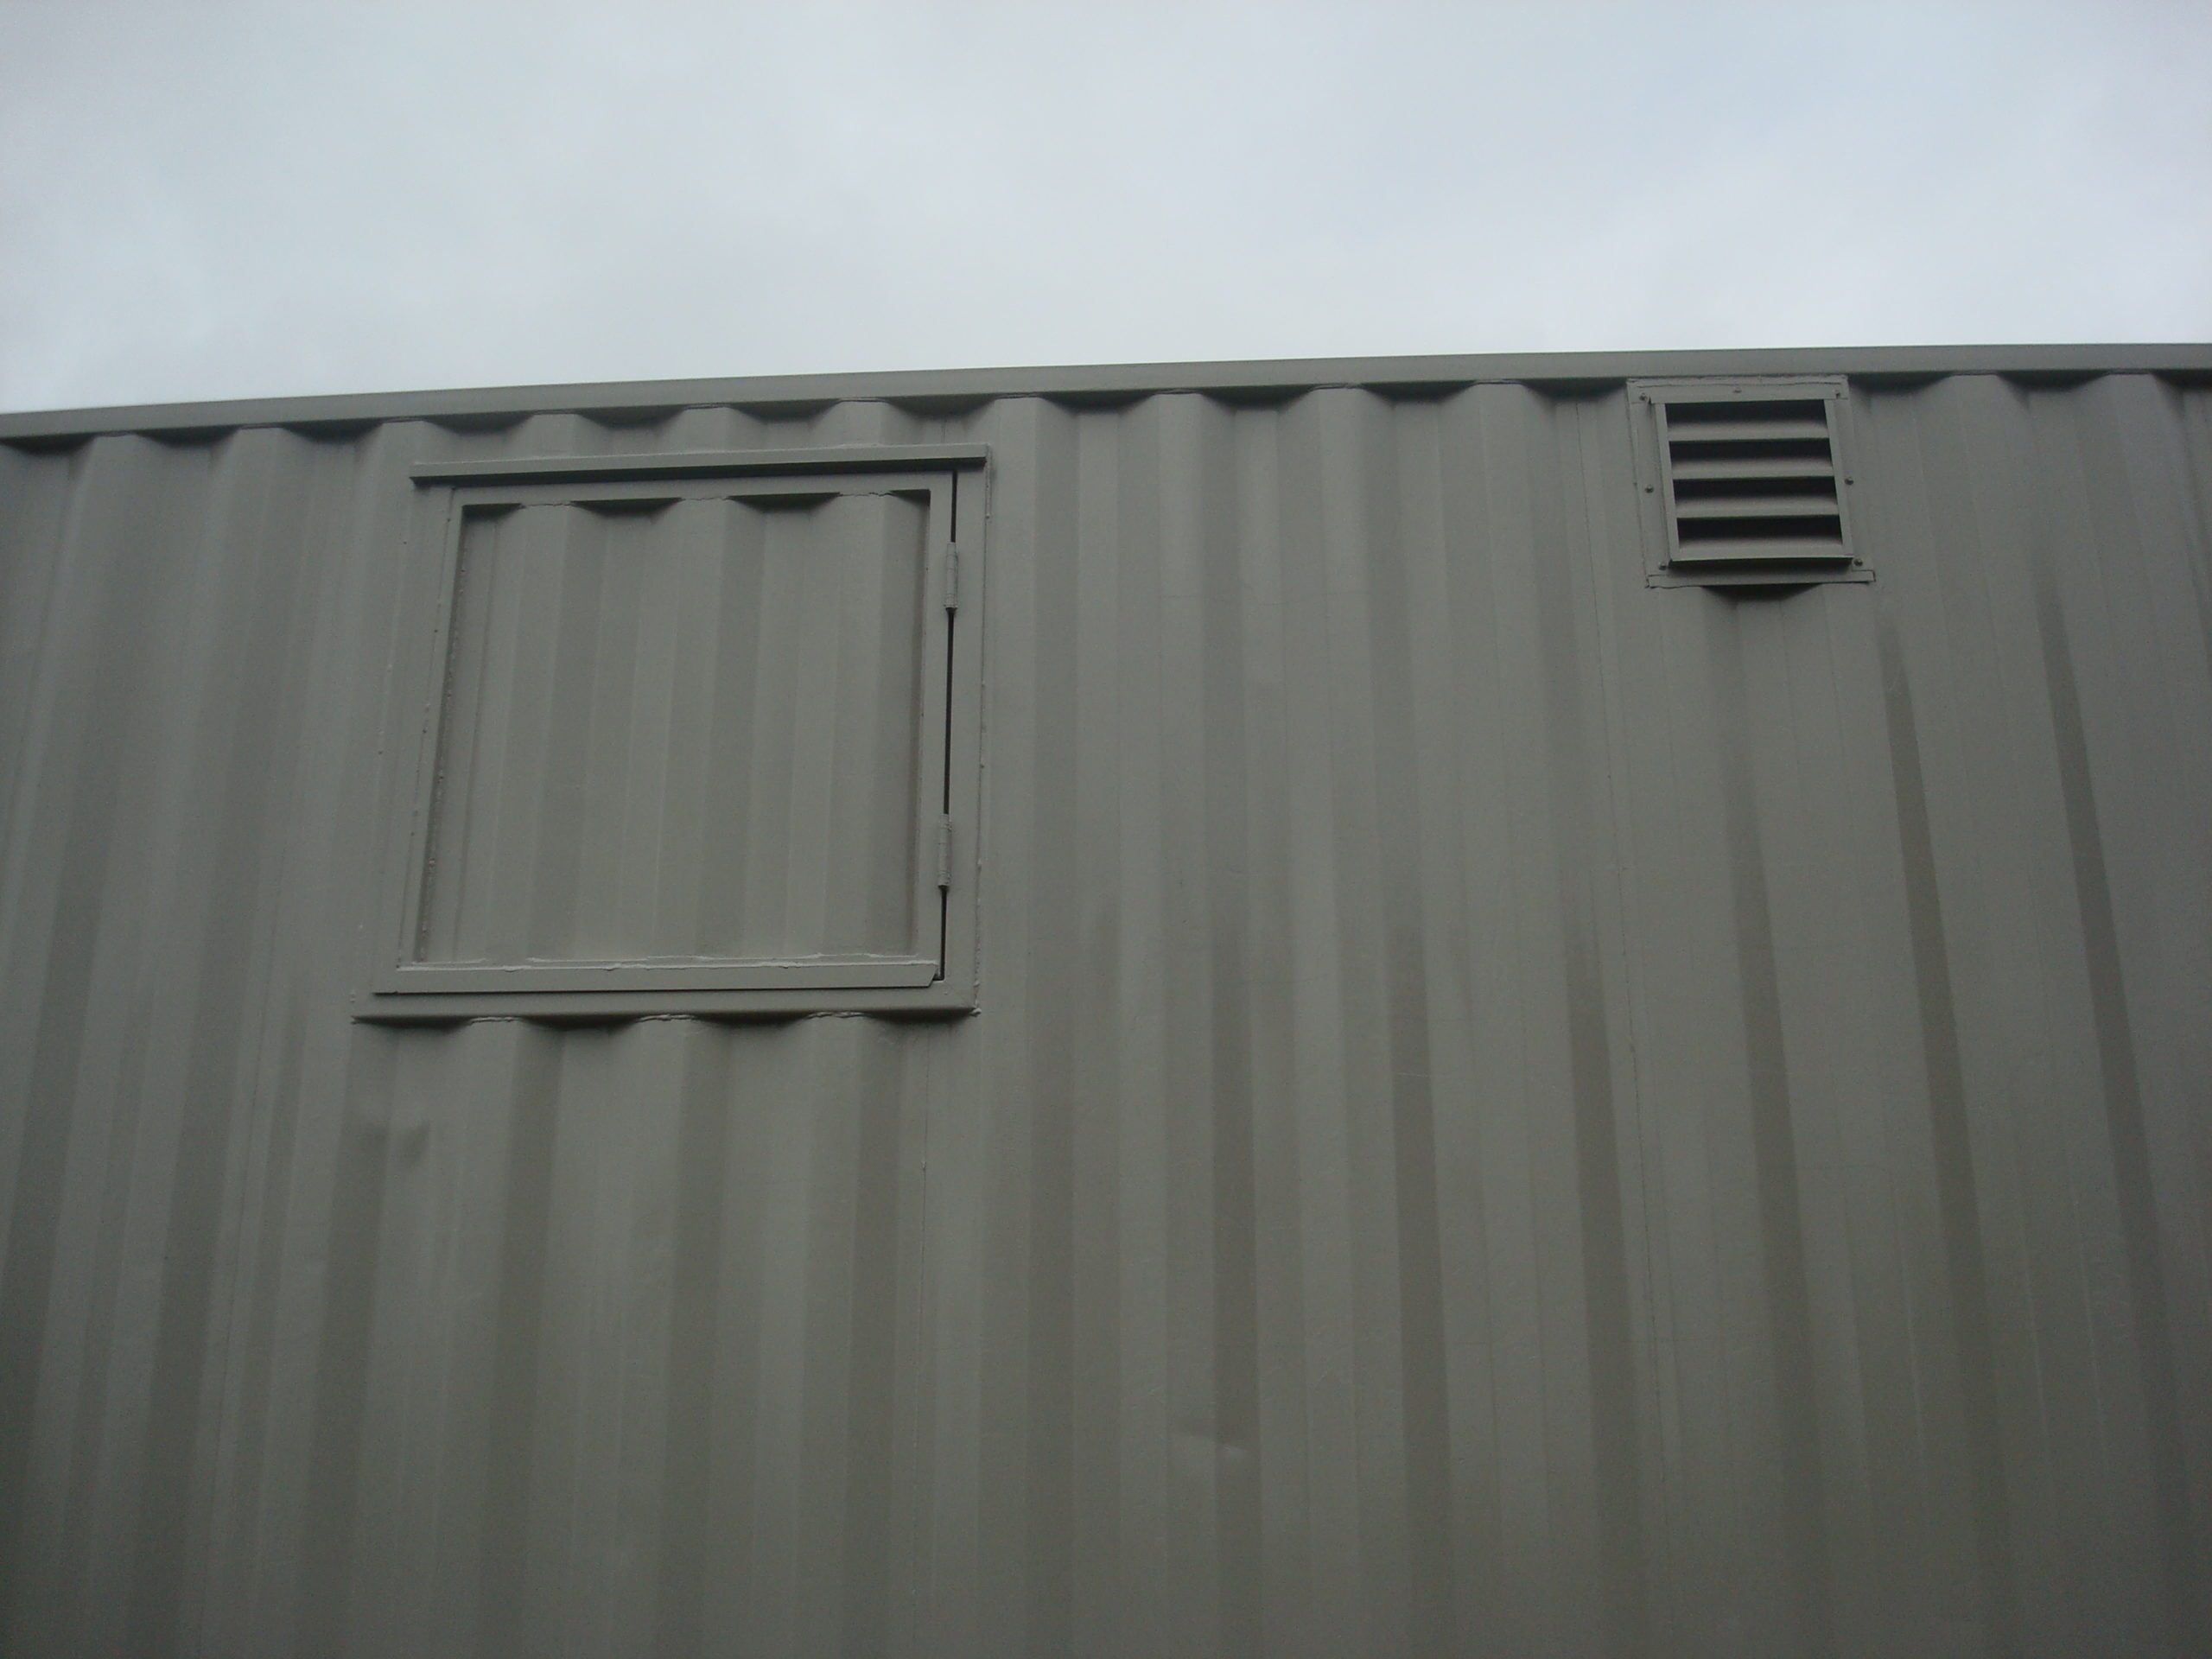 gray exterior shipping container